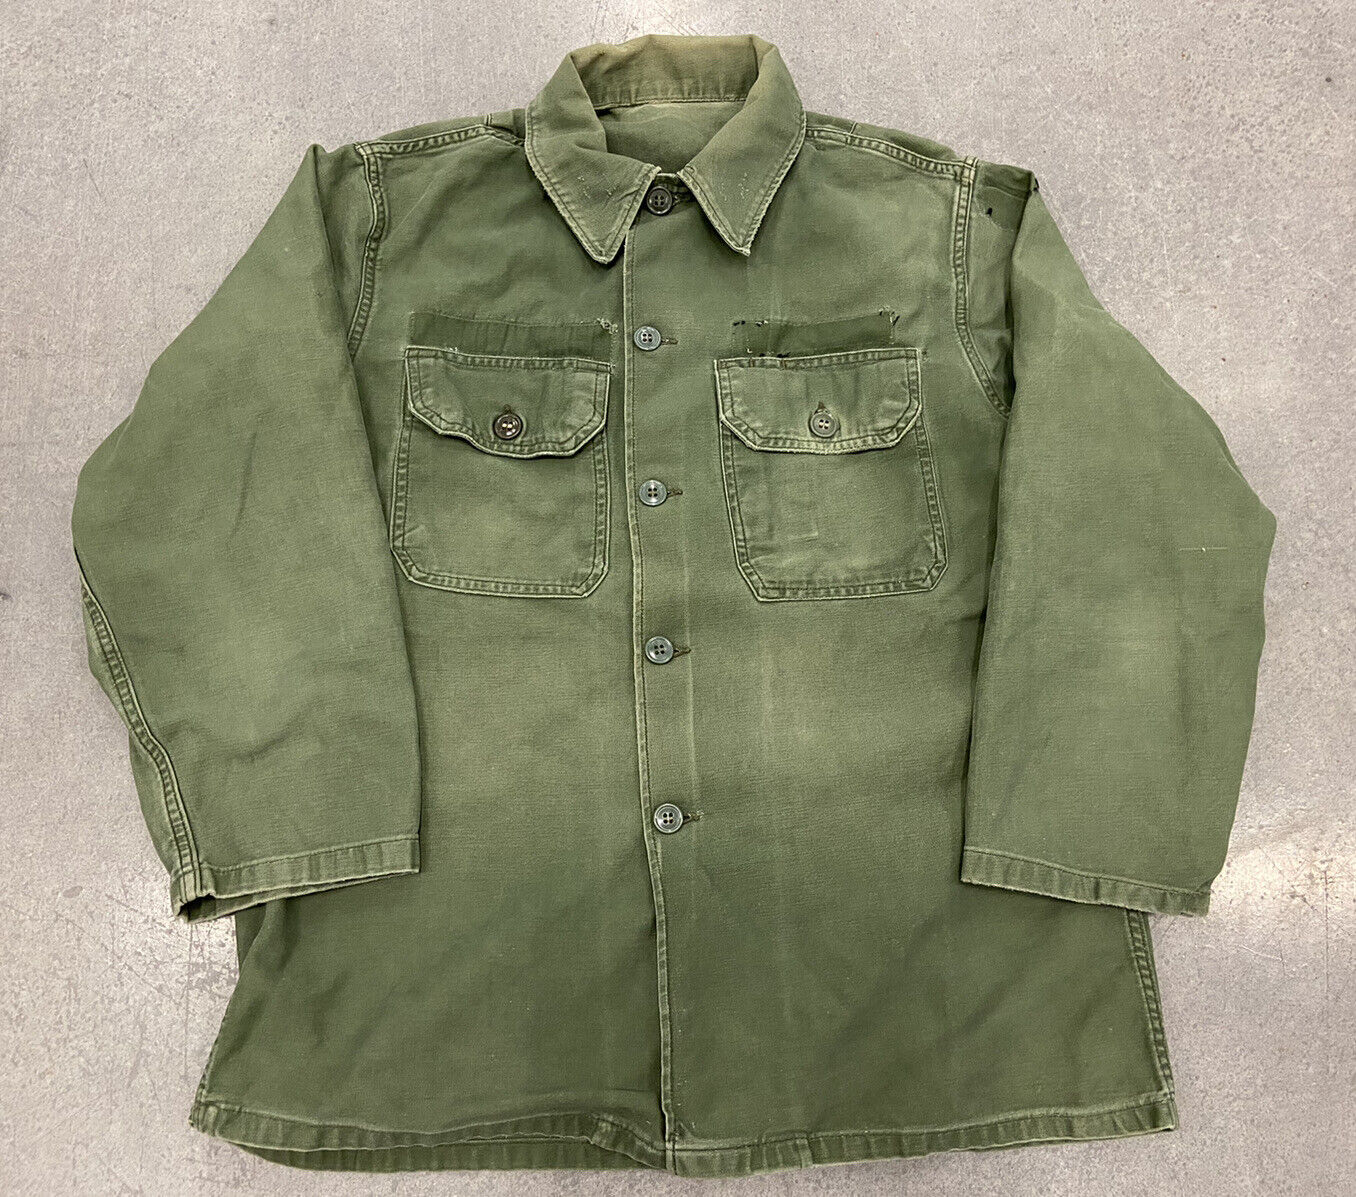 VTG Vietnam Era US Army OG-107 Sateen Utility Button Shirt Jacket Sm/Md 1964